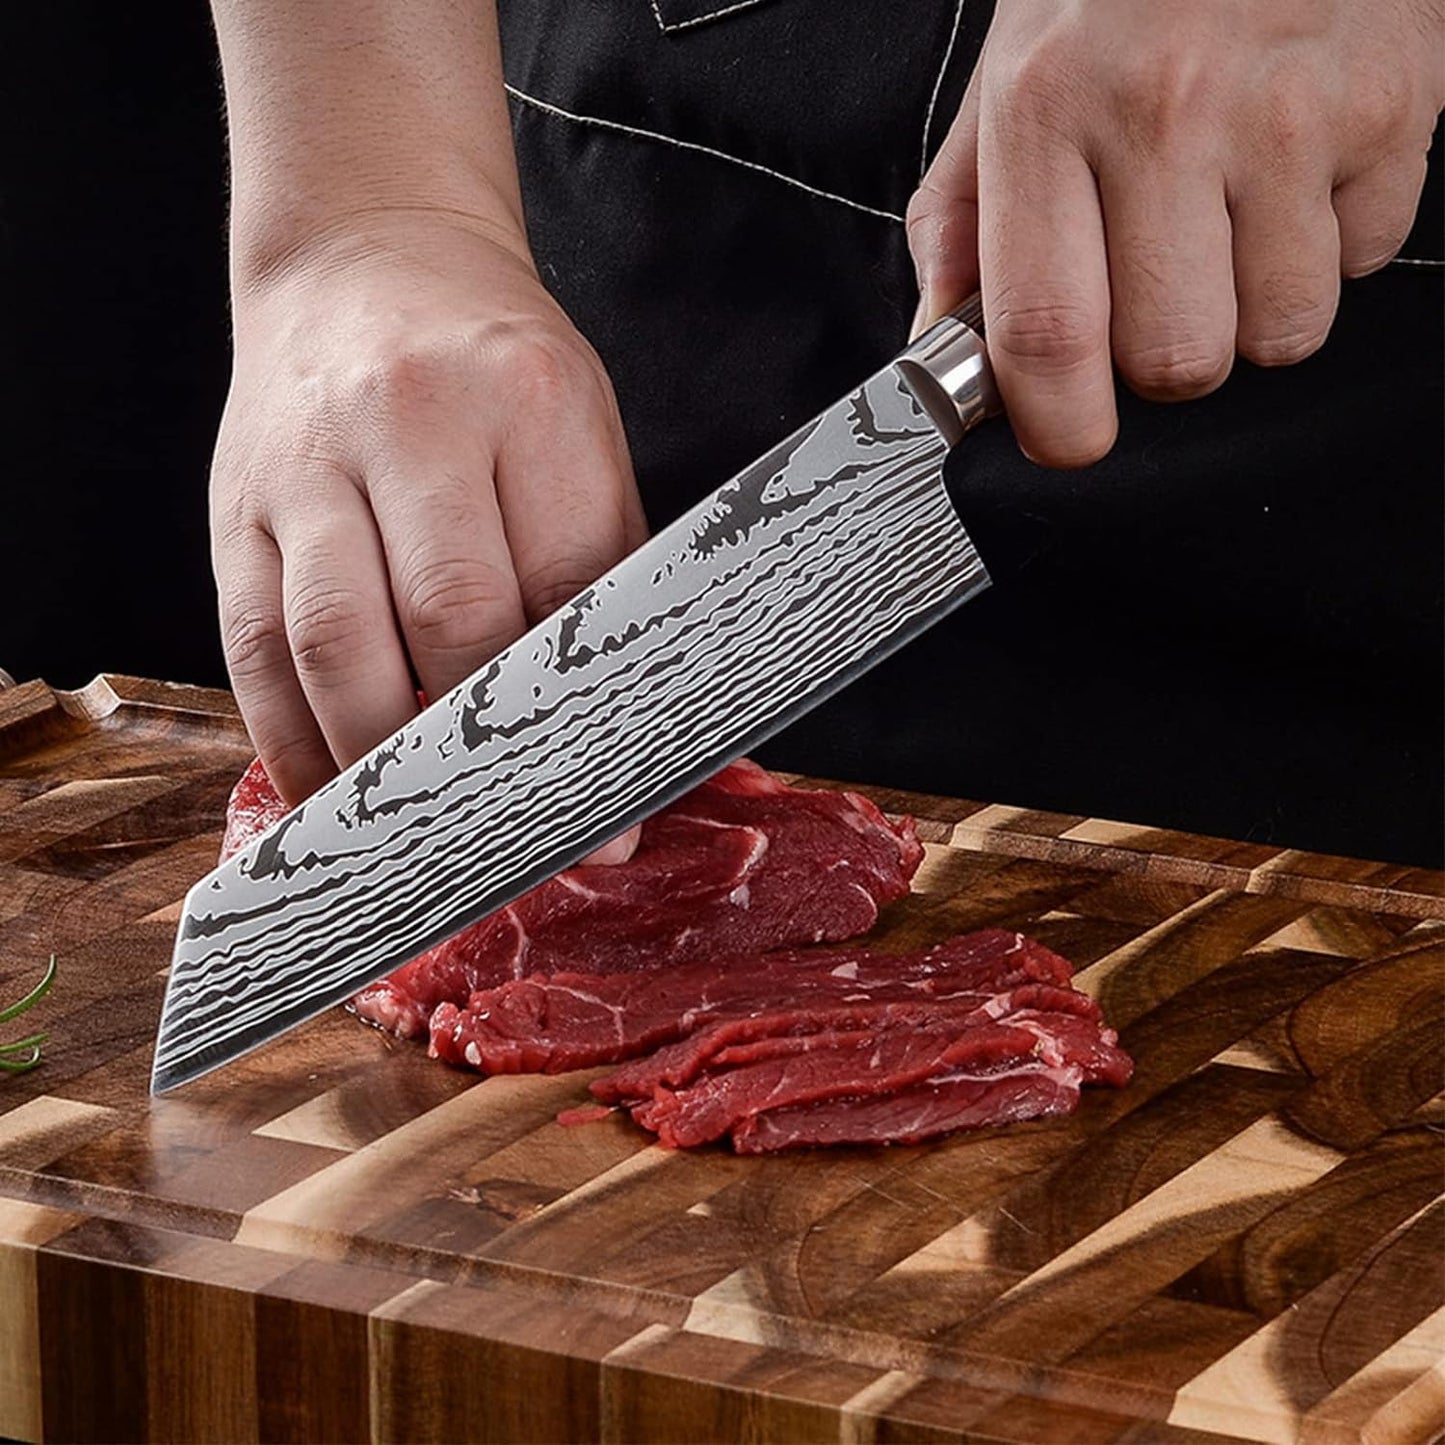 Kitory 7.5'' Kiritsuke Chef's Knife